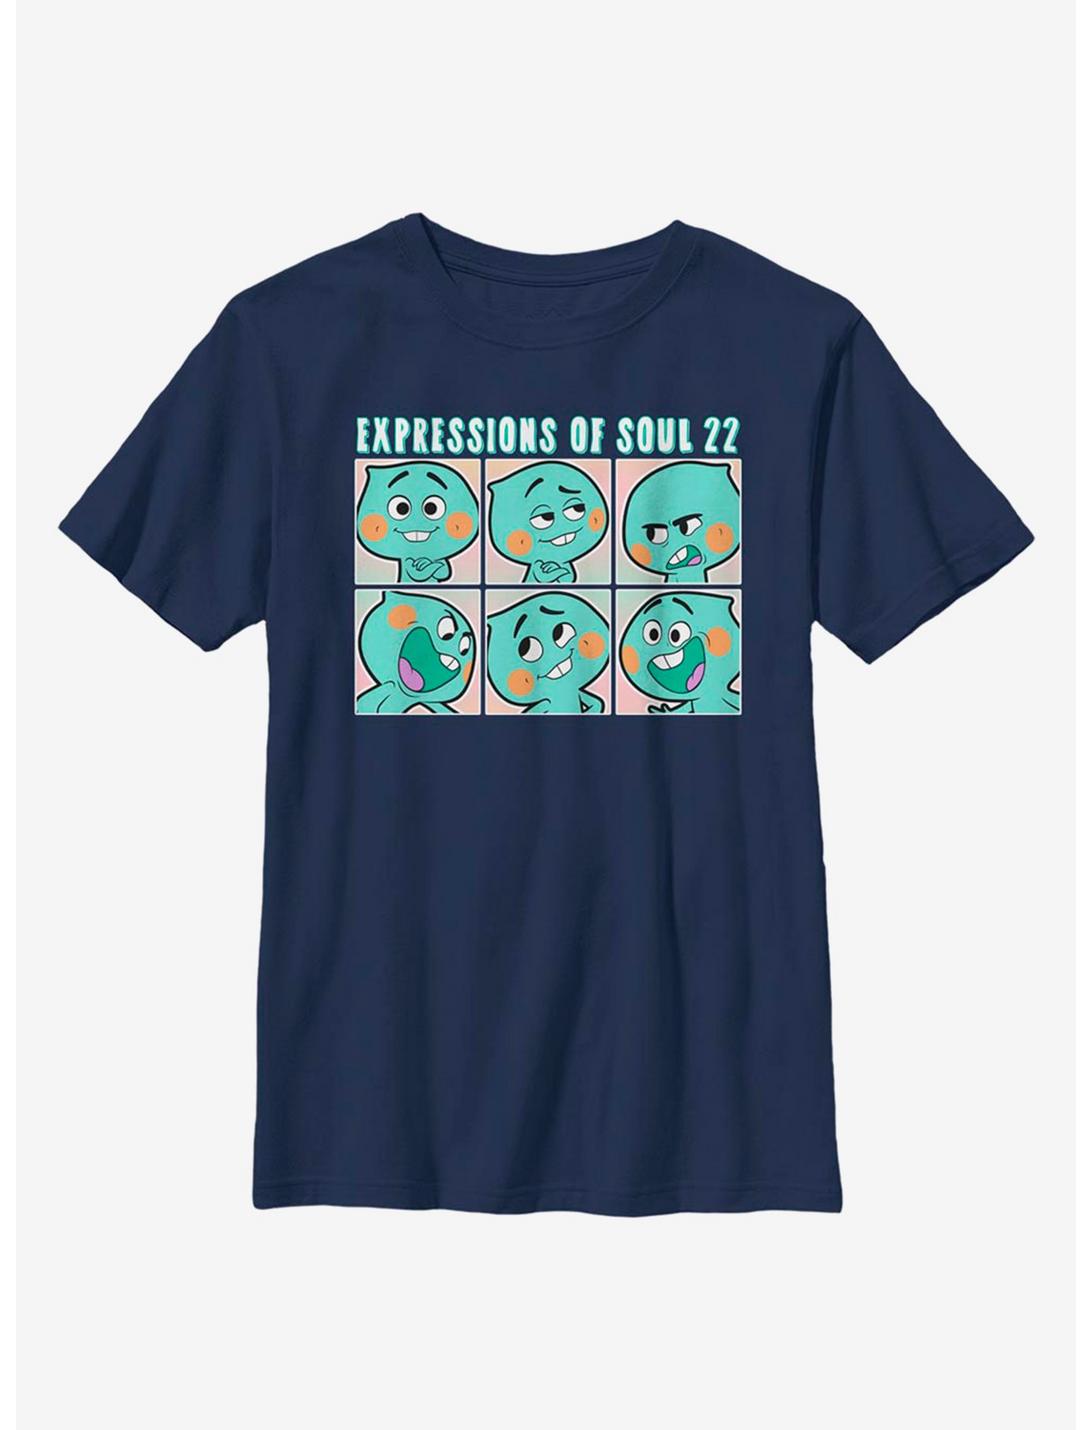 Disney Pixar Soul Expressions Of Soul 22 Youth T-Shirt, NAVY, hi-res